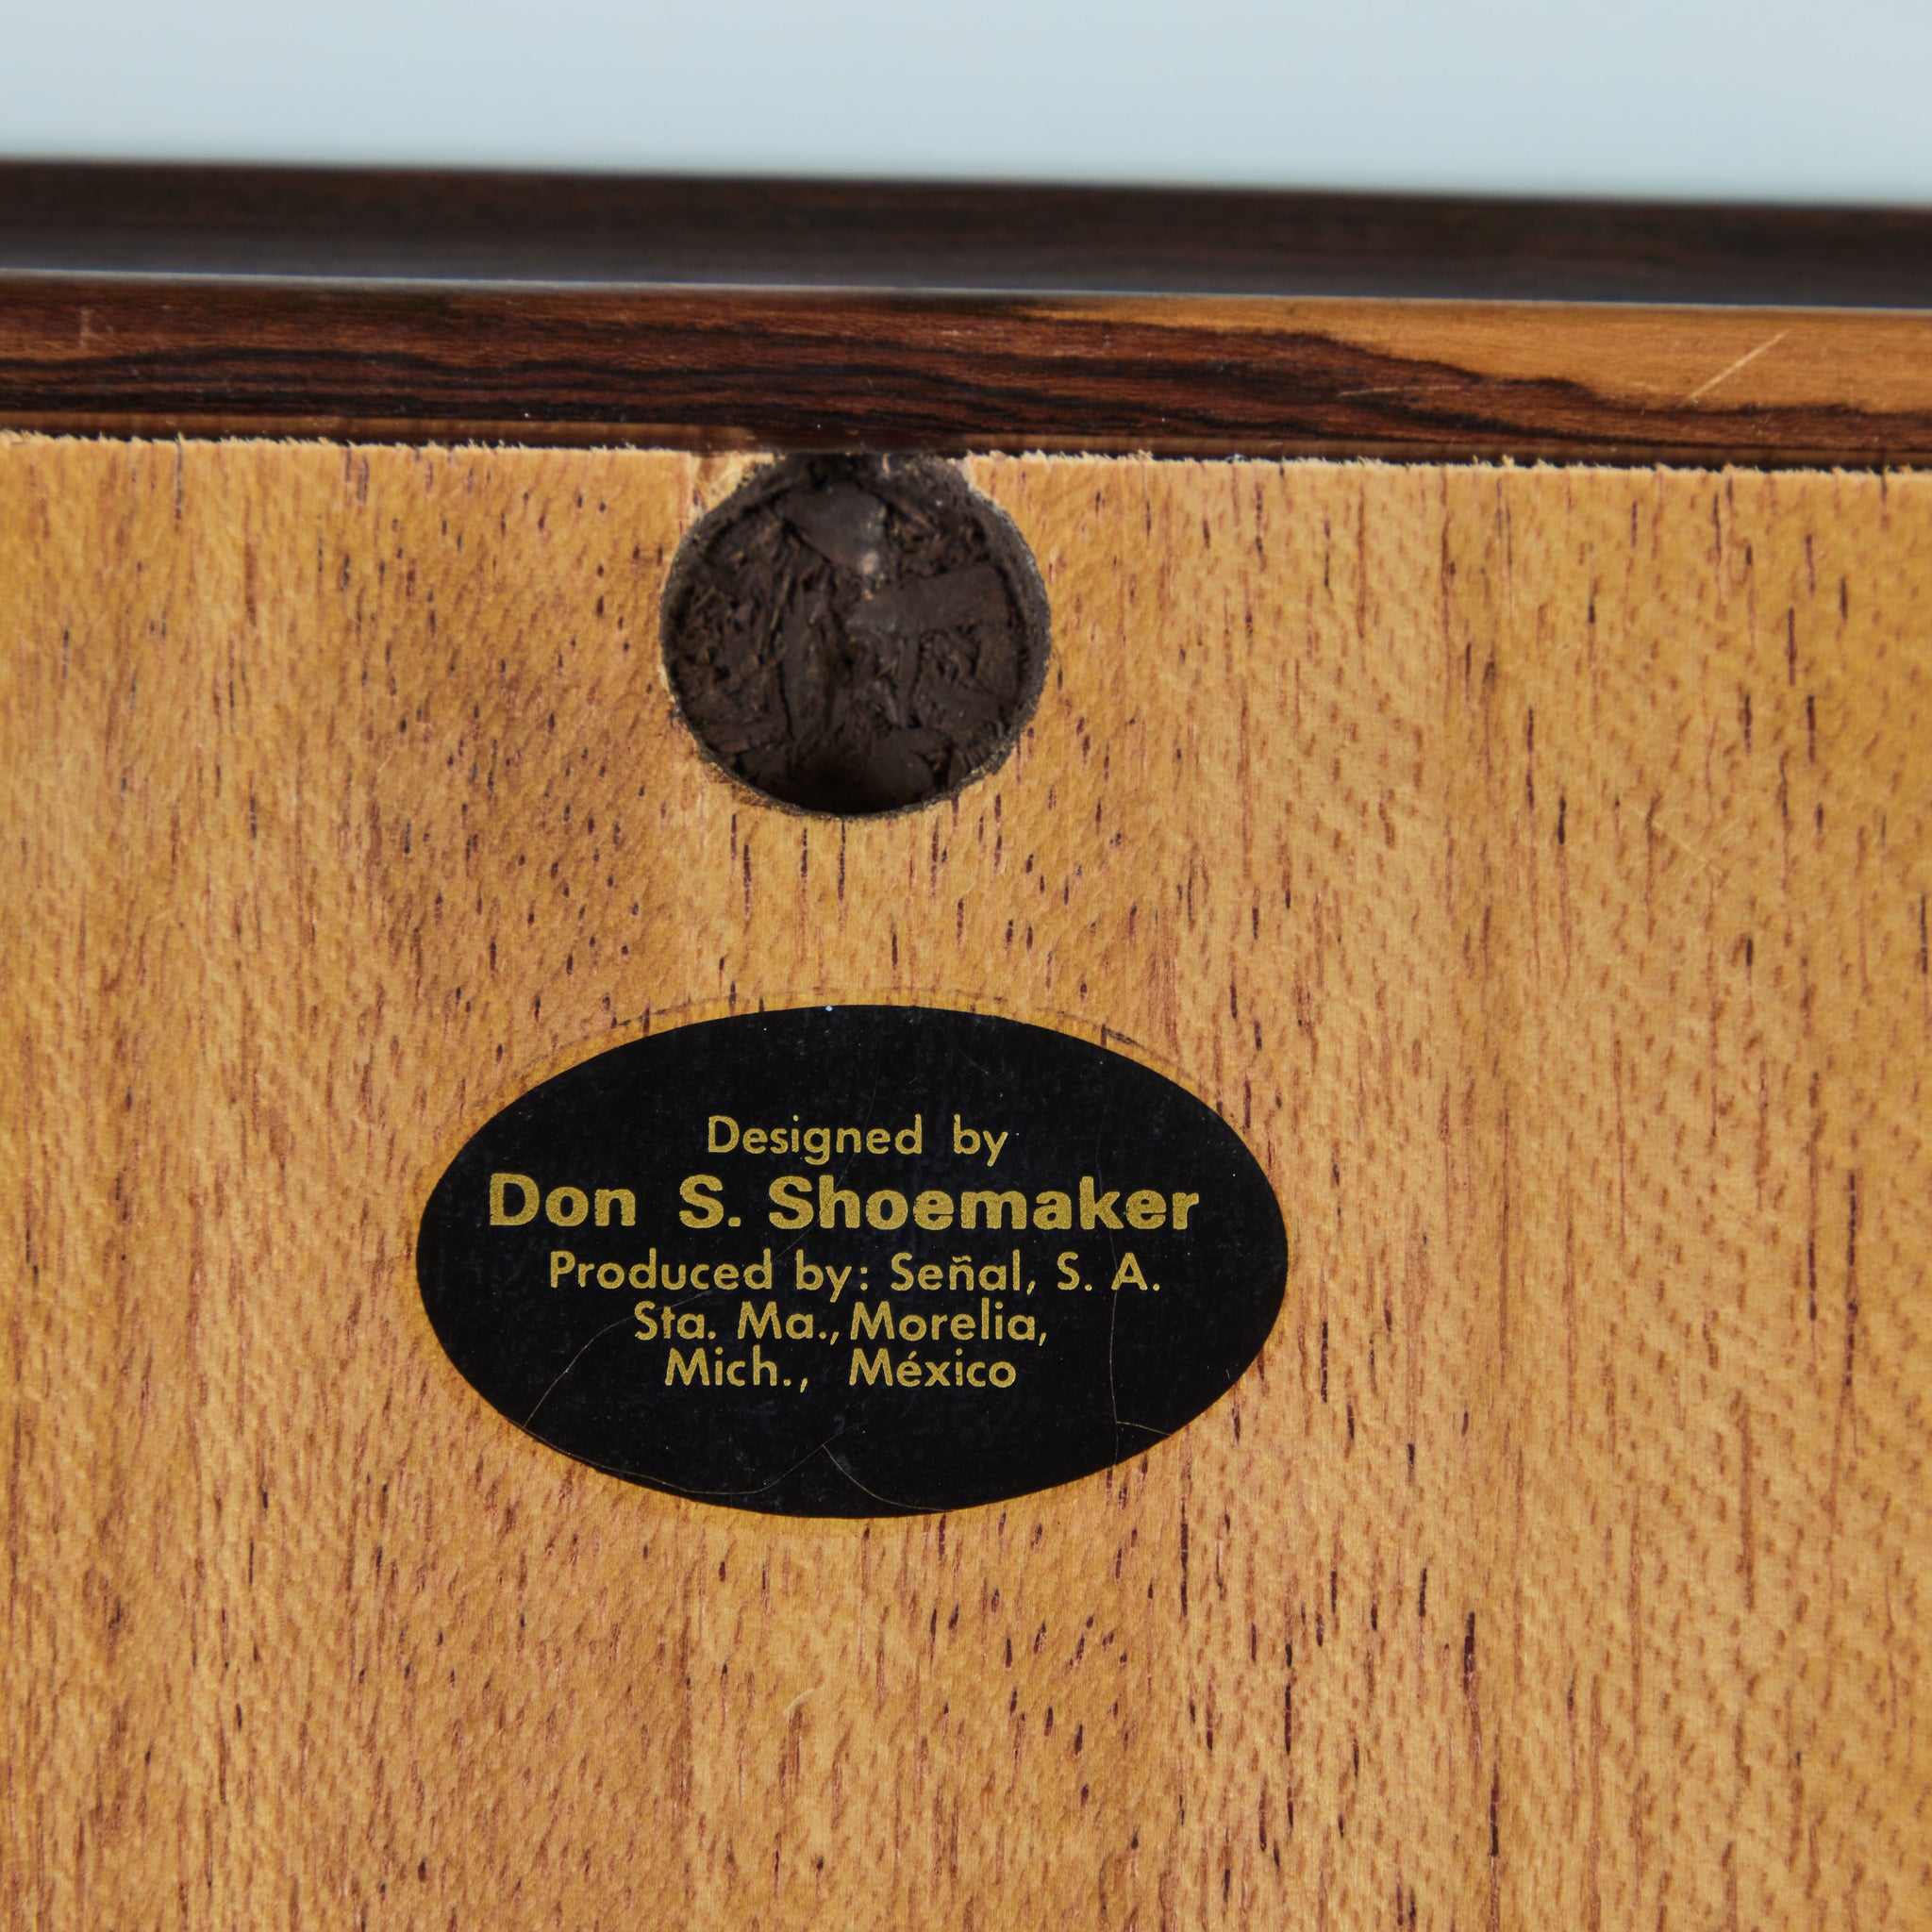 Don Shoemaker Decorative Tray for Señal